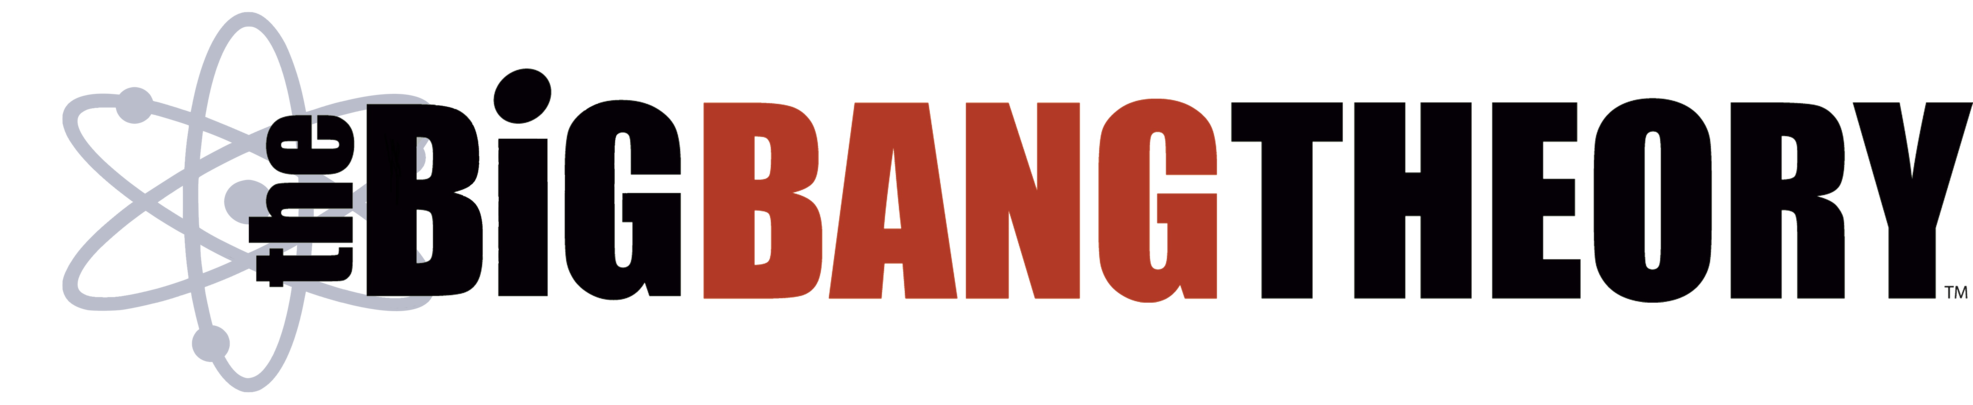 The Big Bang Theory Logo Transparent Image